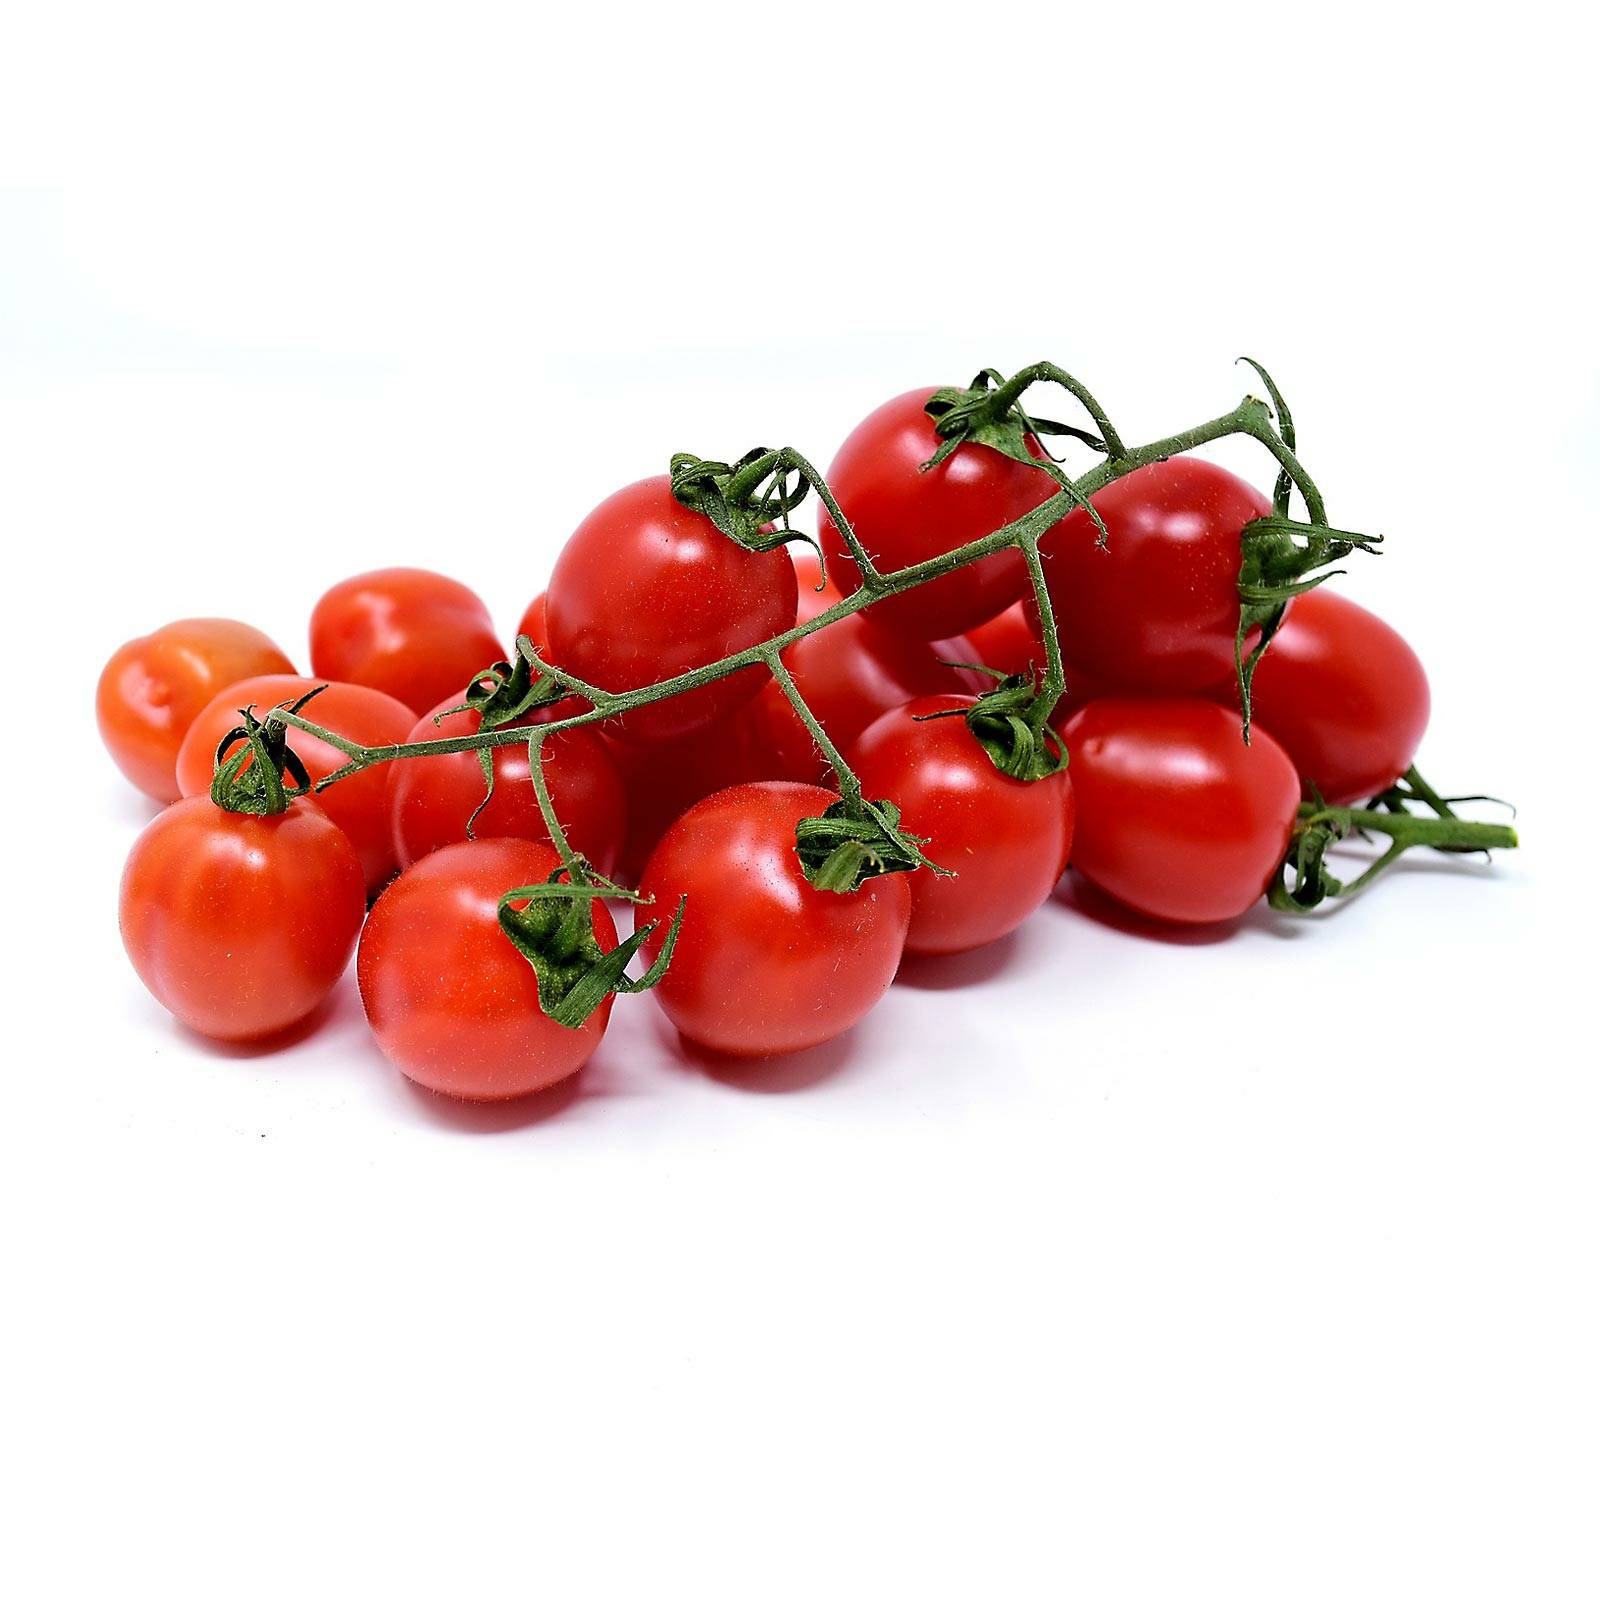 l_coctailtomaten_pixabay_1600 Tomaten - Cocktail­tomaten - Hofladen Altkö